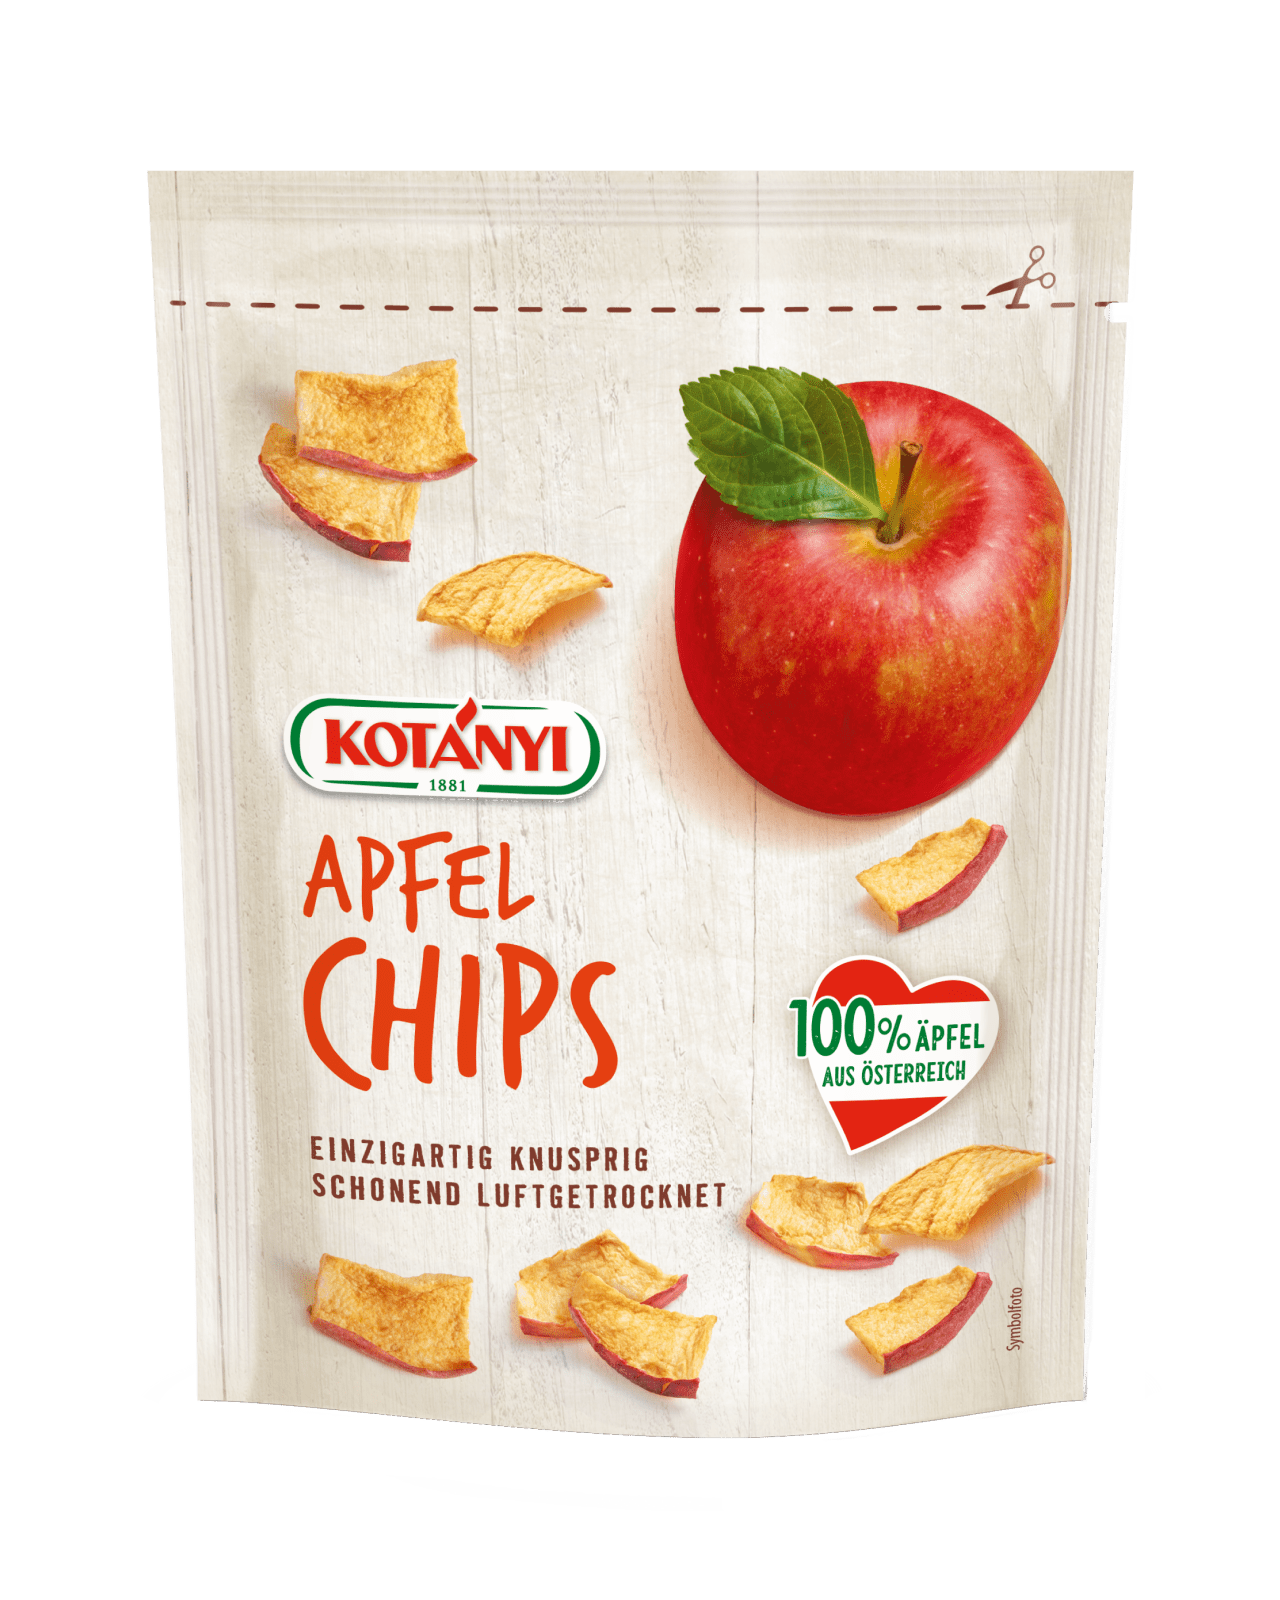 Apfel Chips Natural Snack im Standbeutel